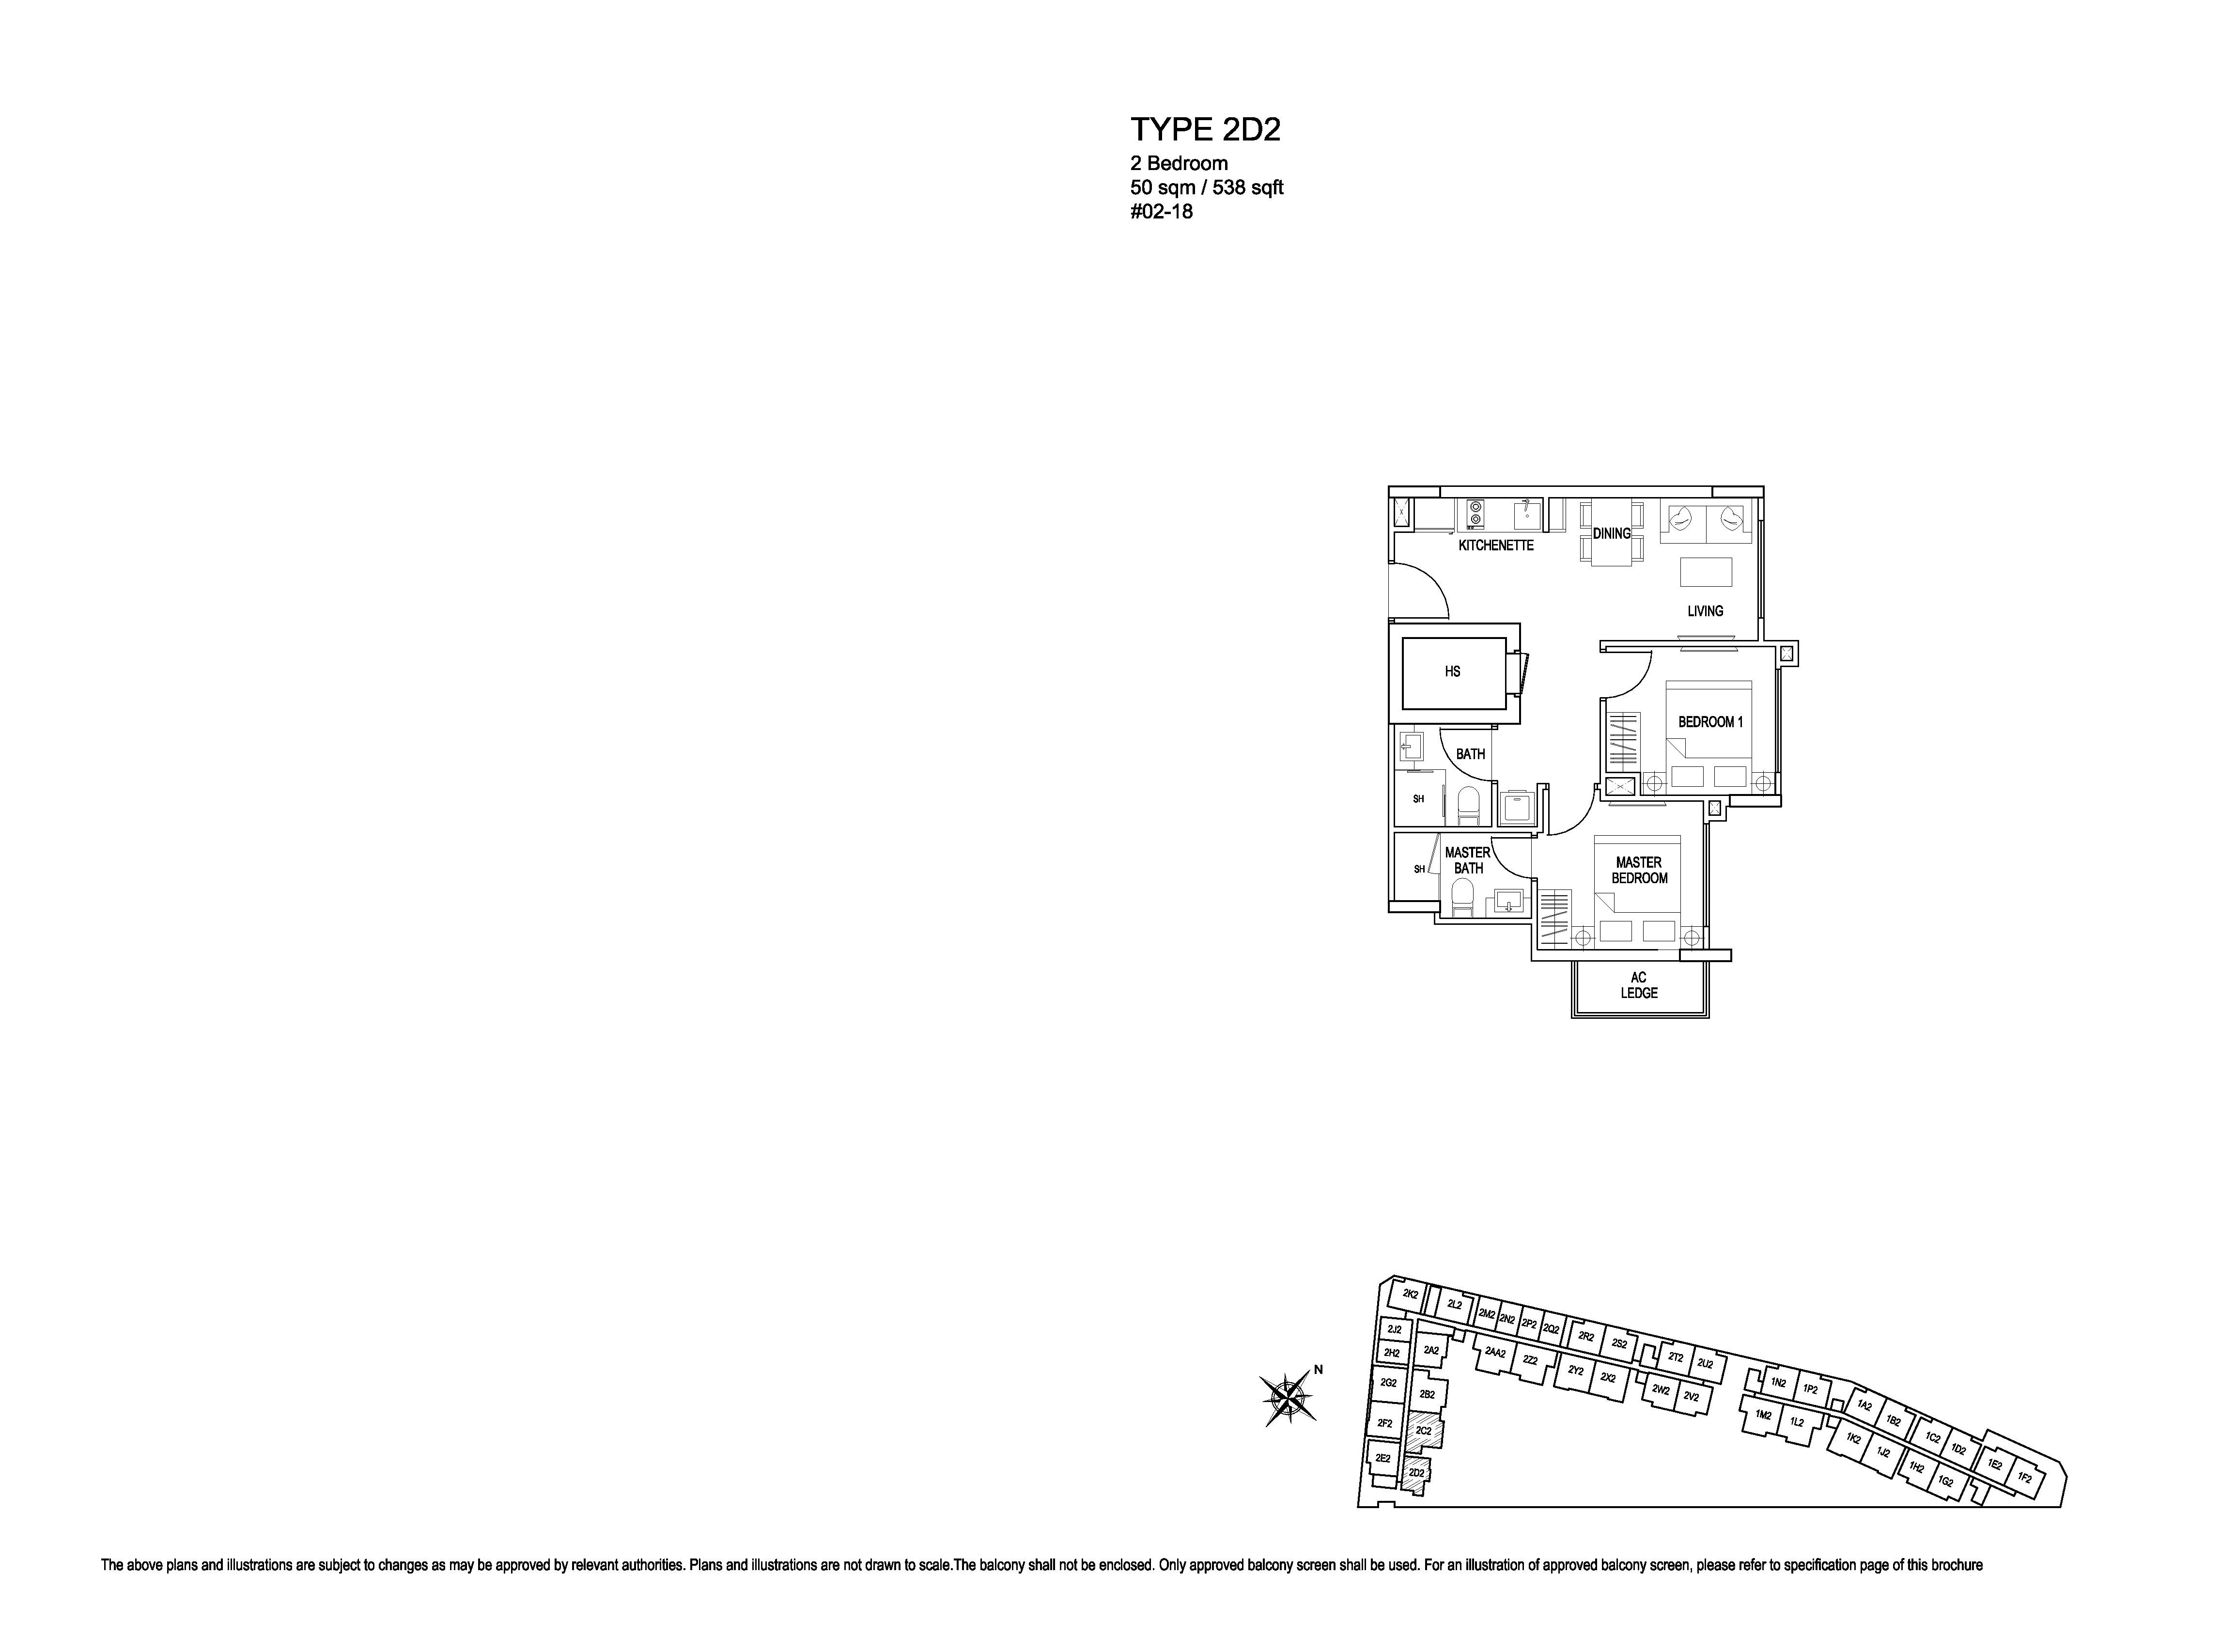 Kensington Square 2 Bedroom Floor Plans Type 2D2